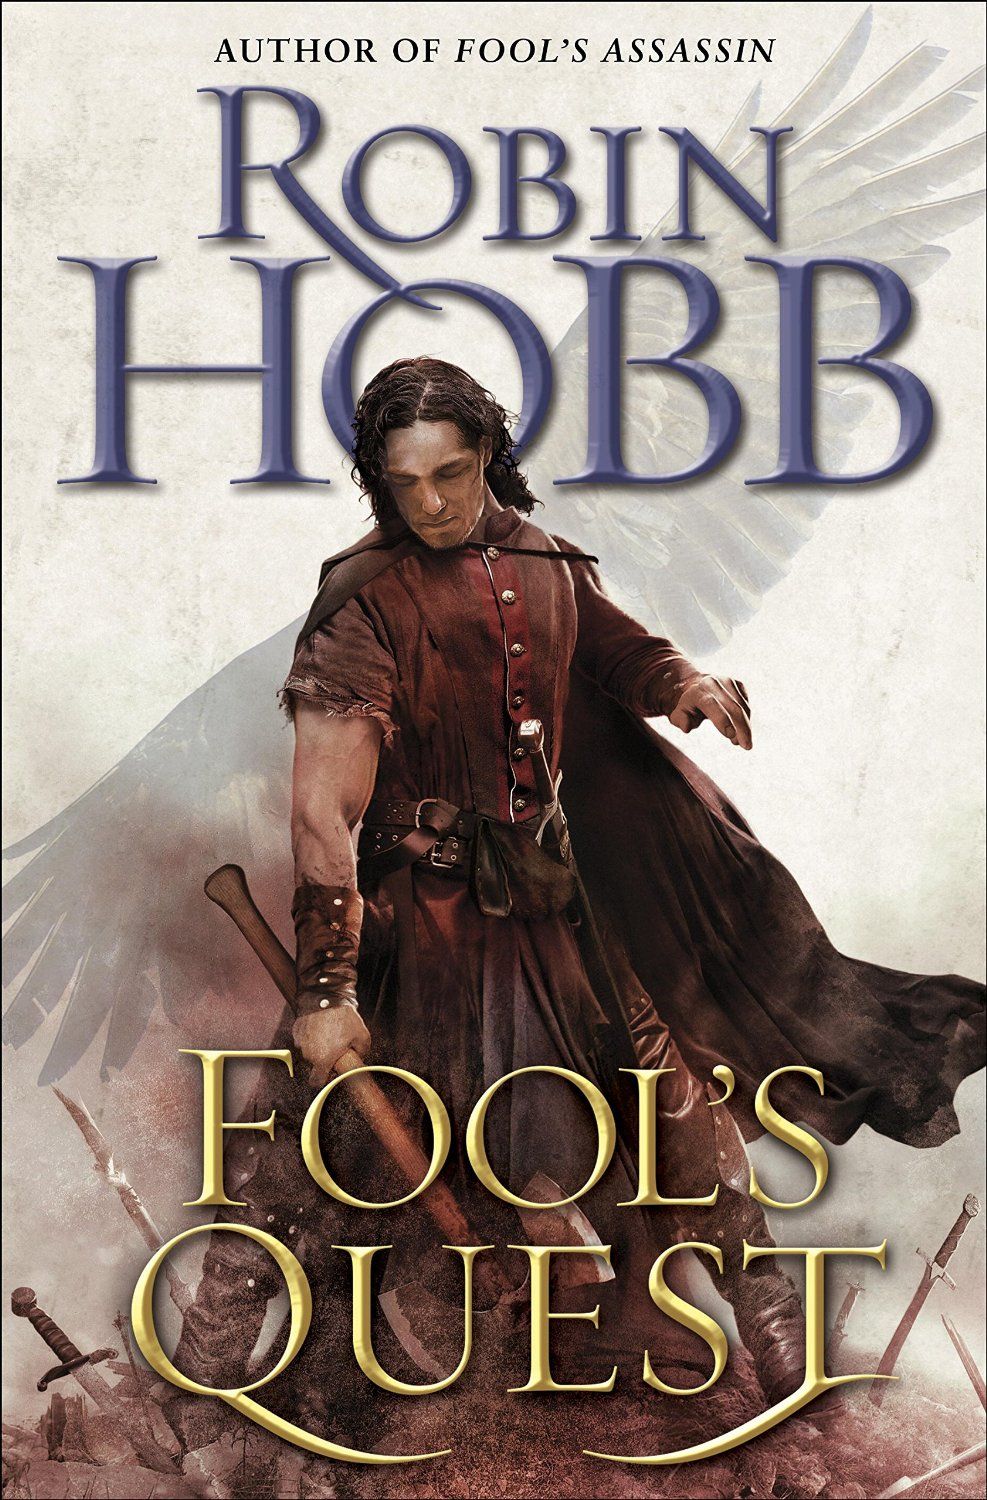 Robin Hobb: Fool's quest (Hardcover, 2015, Del Rey)